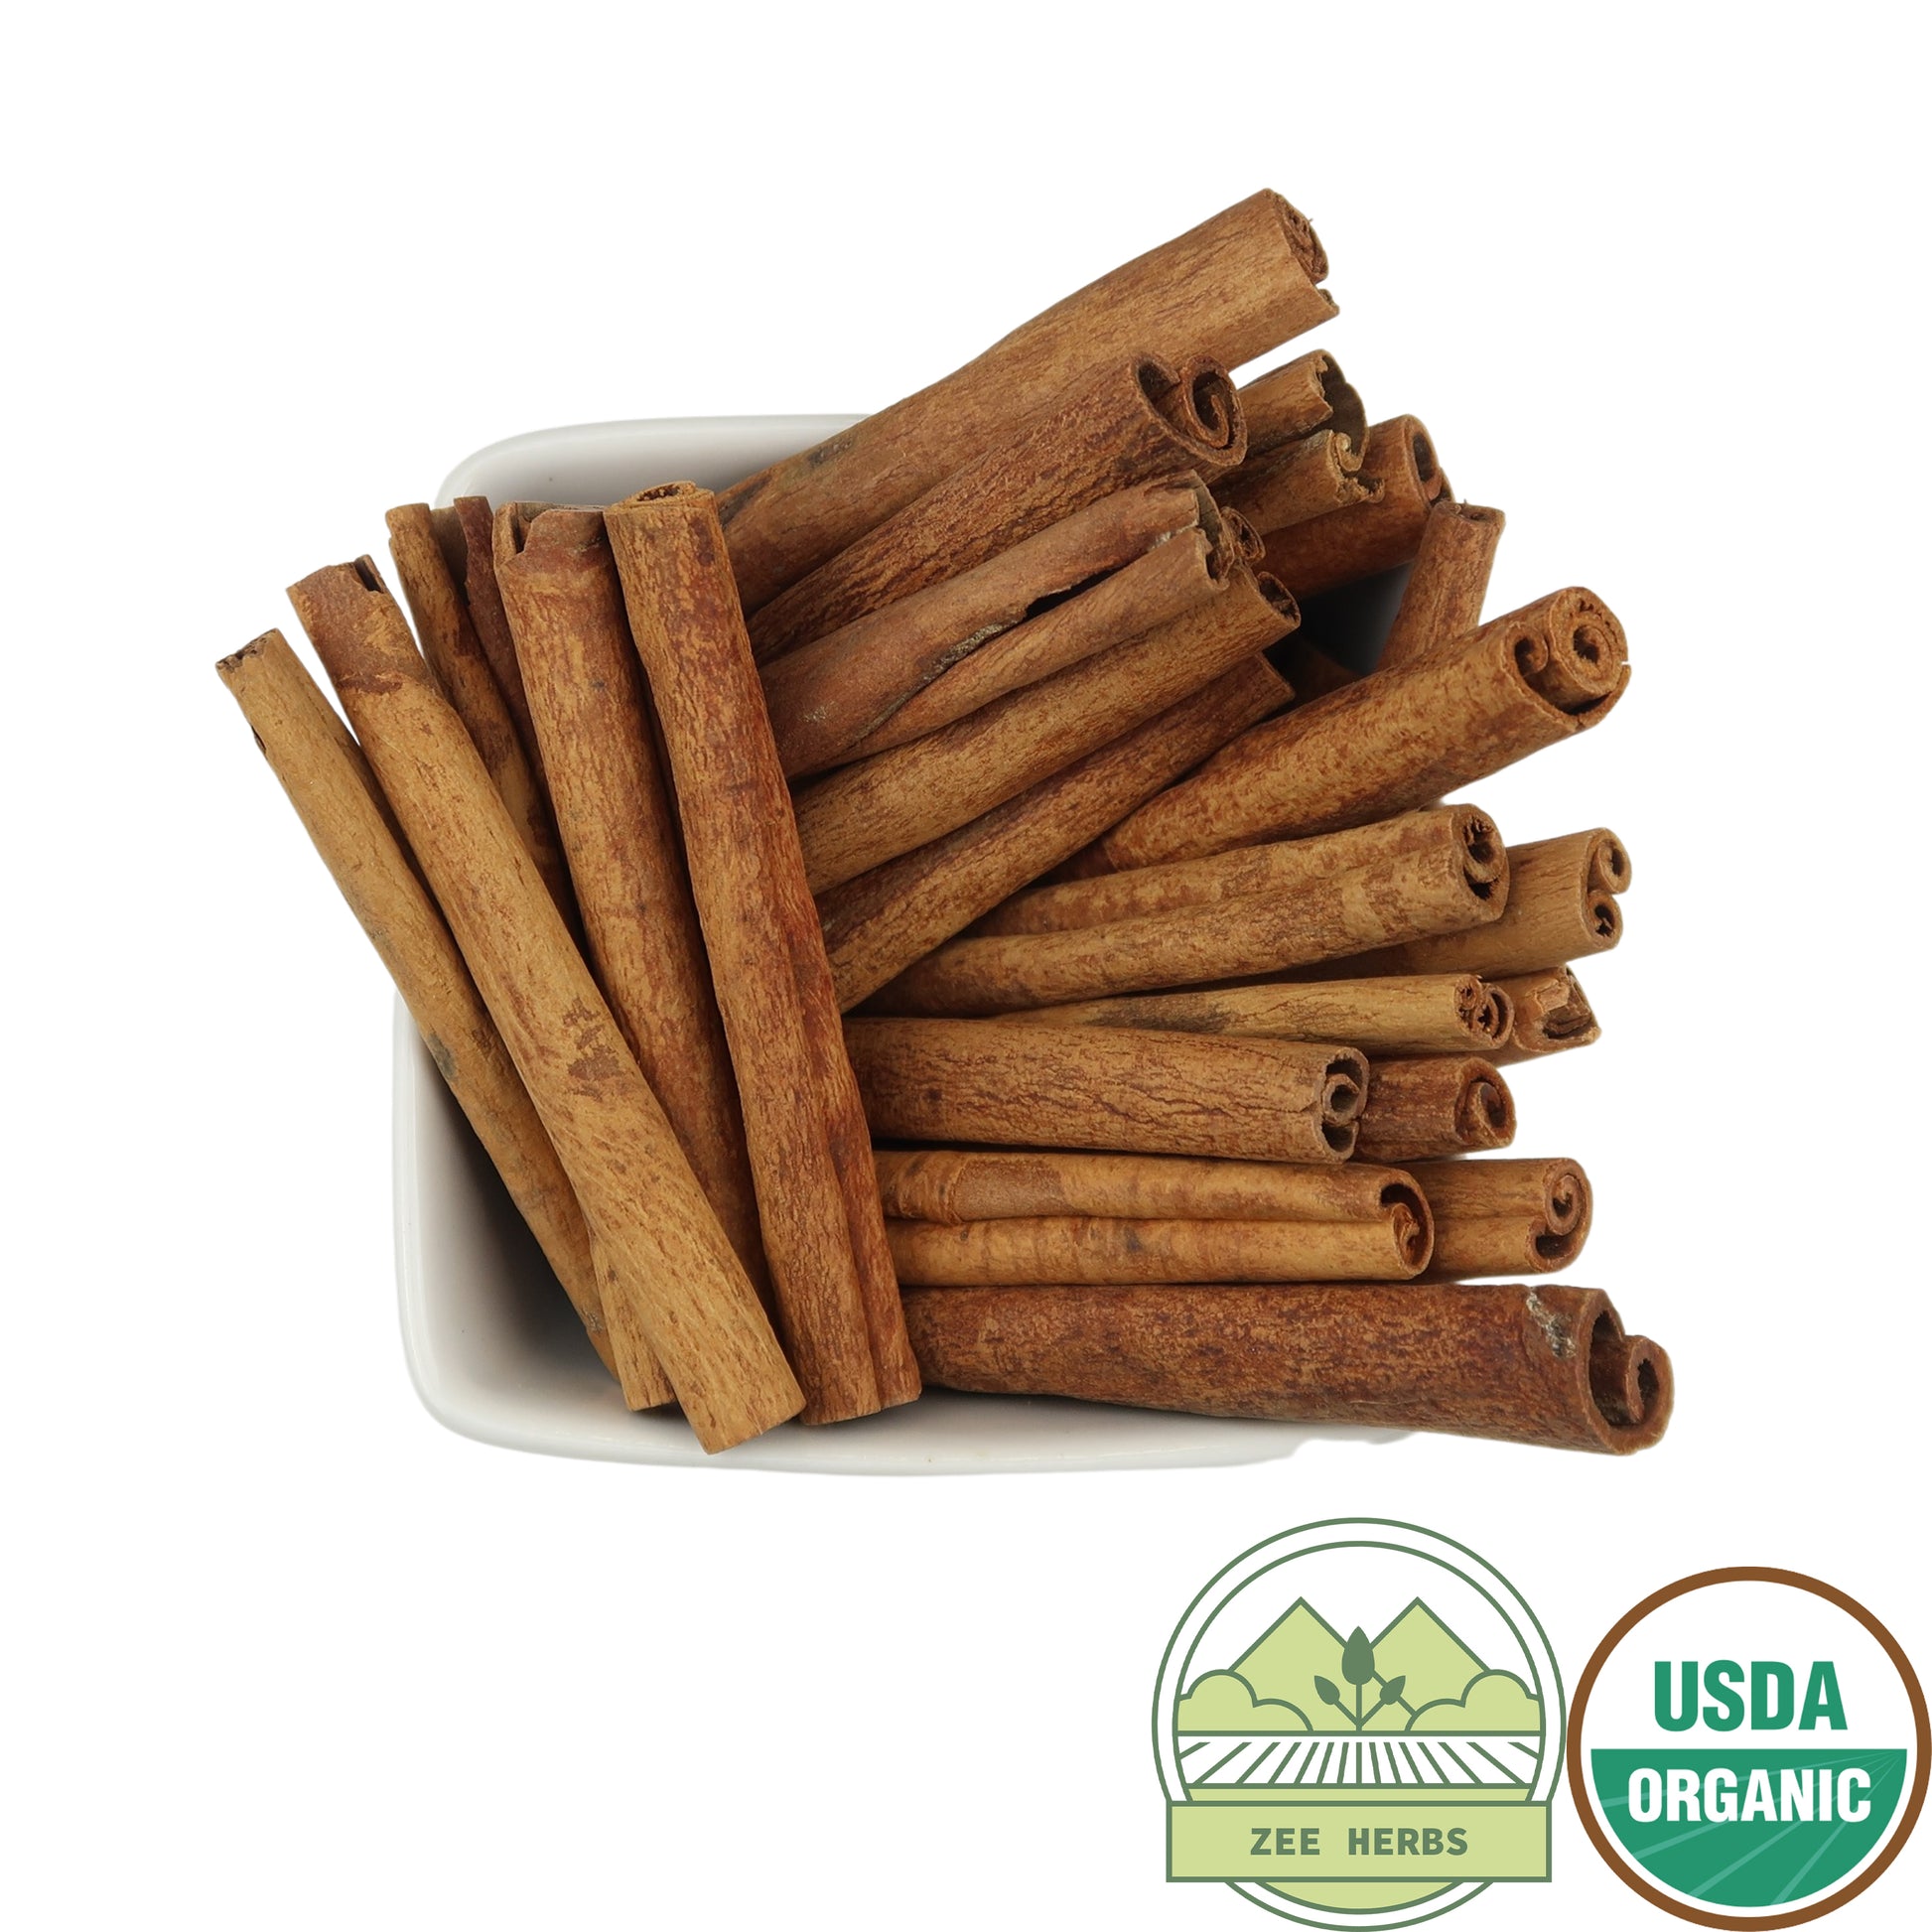 Why Buy Cinnamon Sticks? - Blog